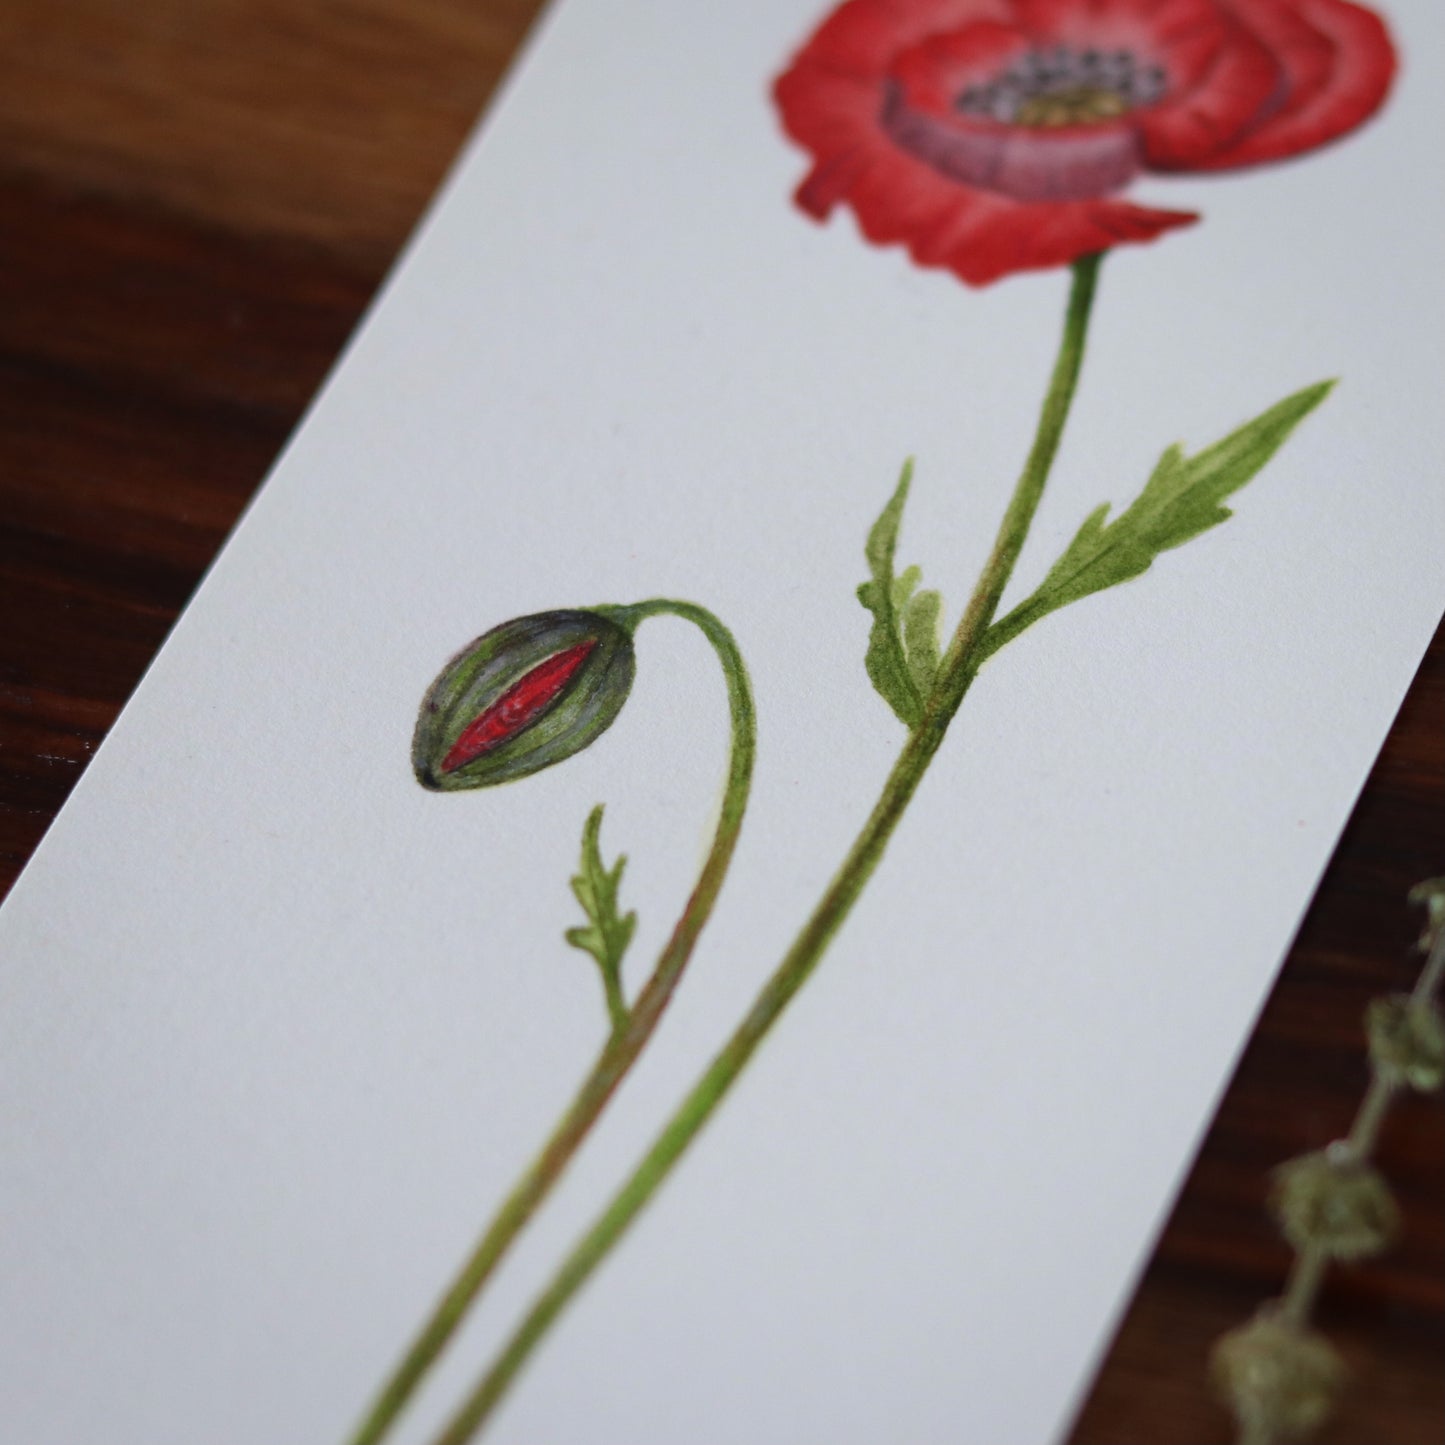 Poppy Flower - Original botanical illustration